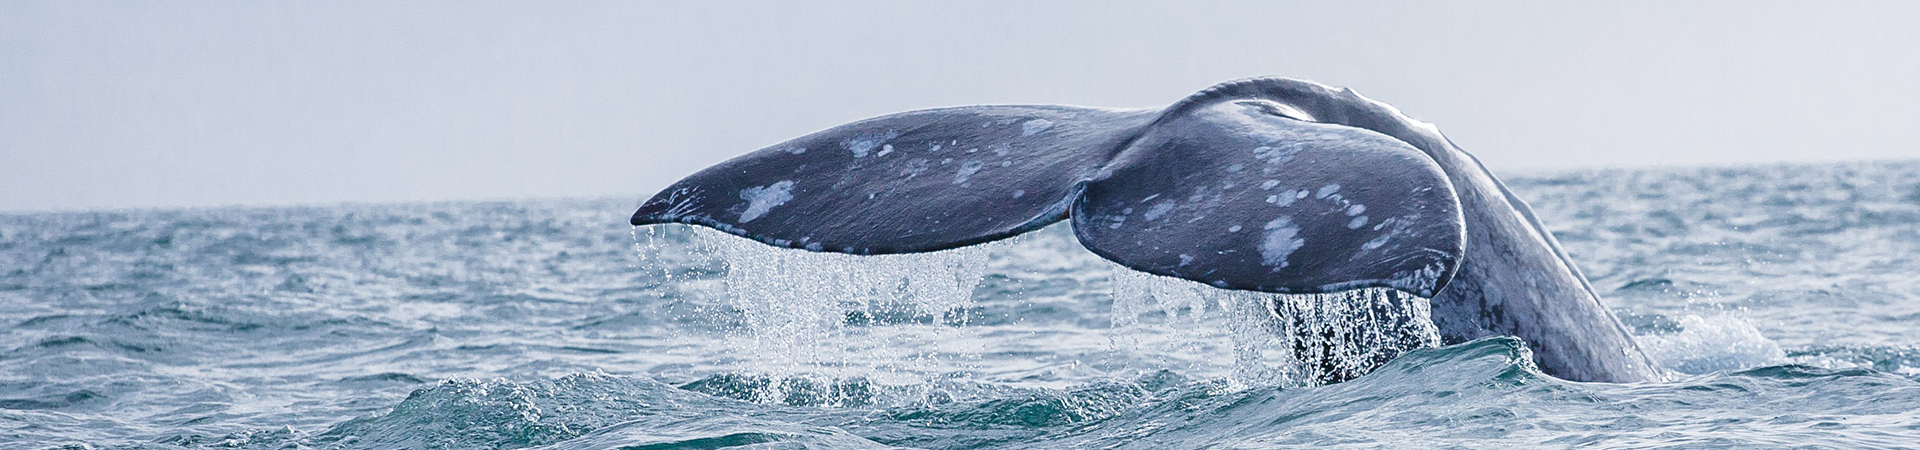 Gray whale ecology trip fluke siting